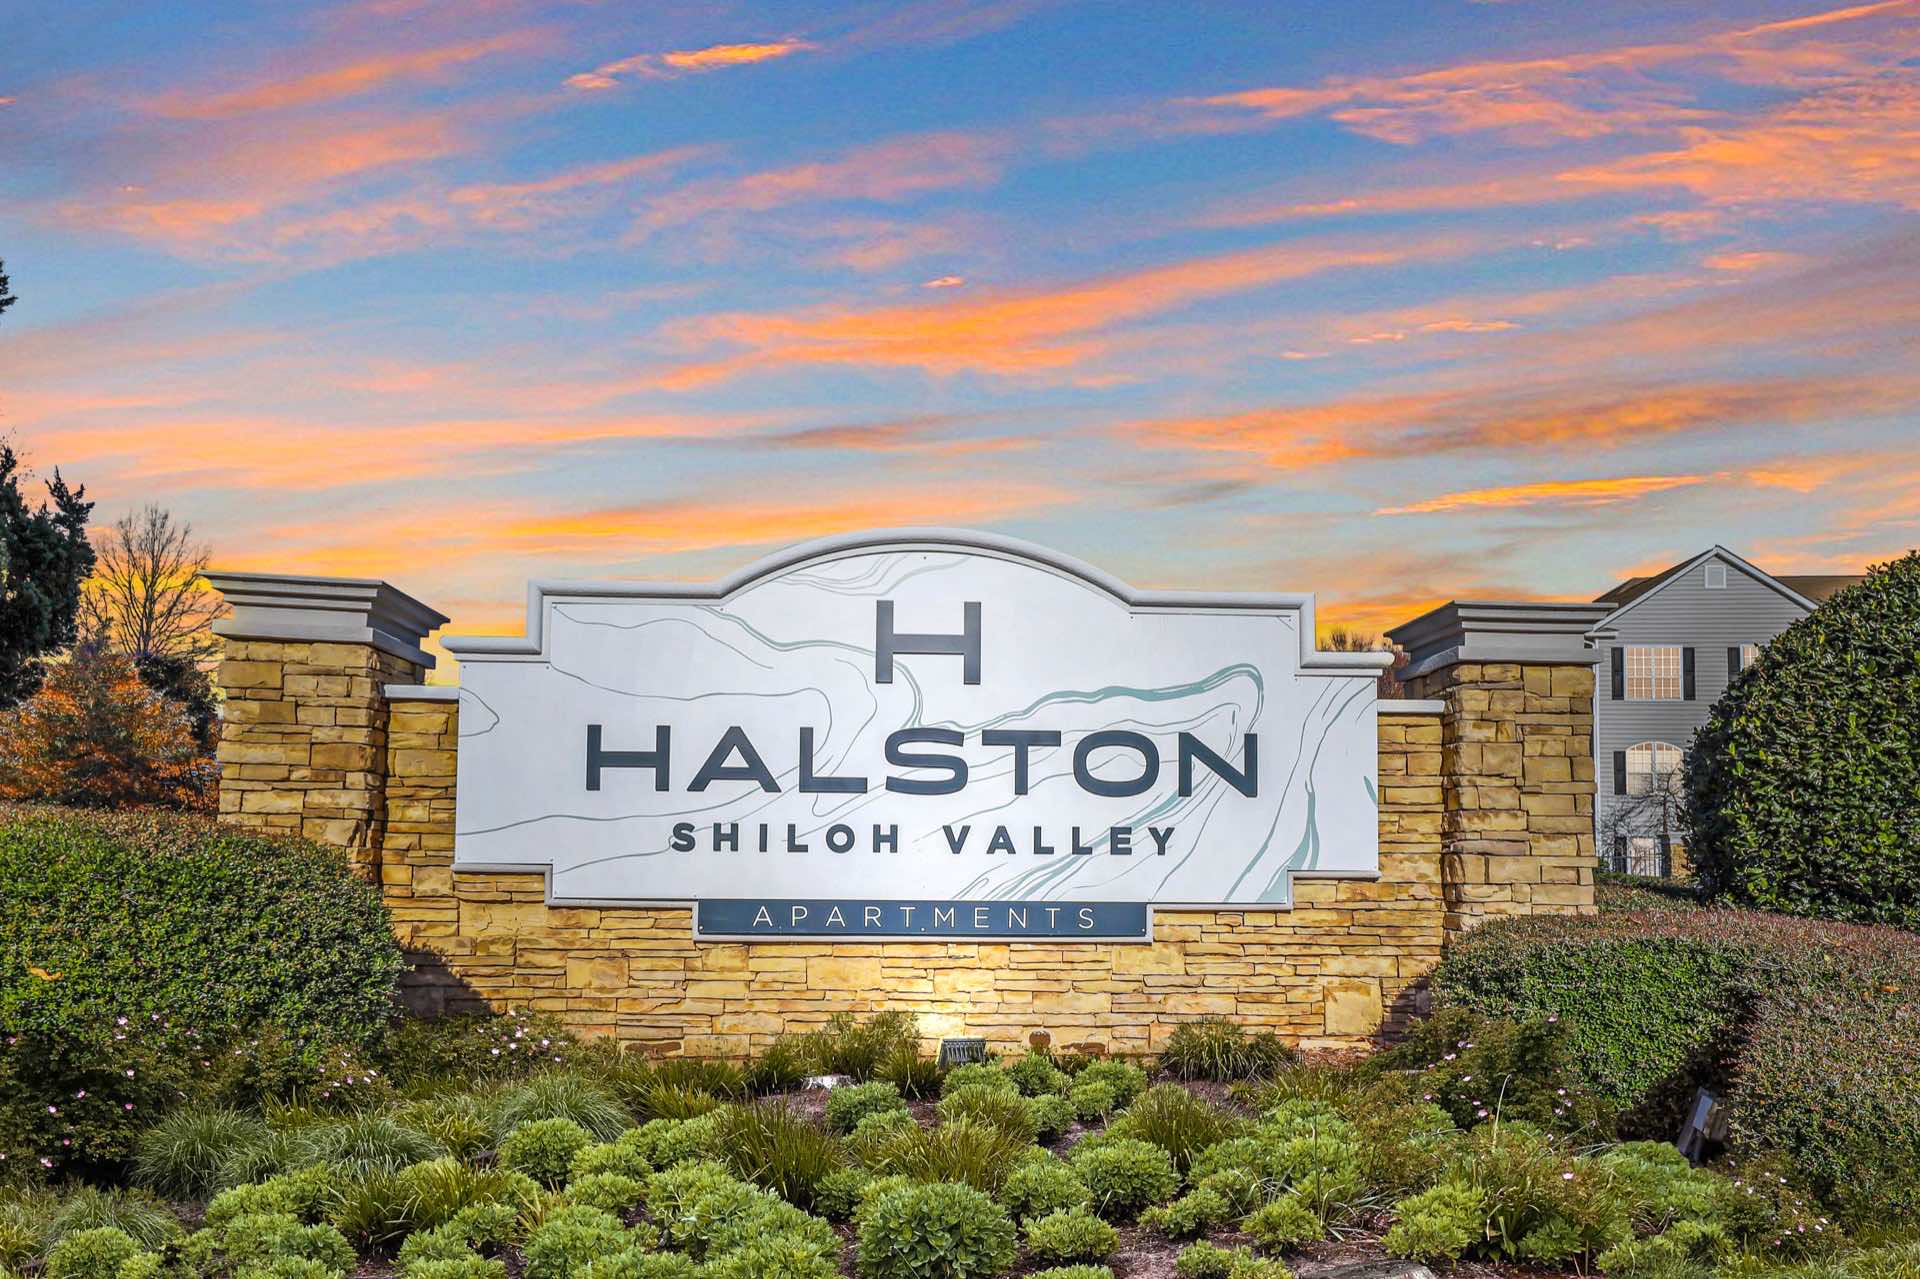 Halston Shiloh Valley sign